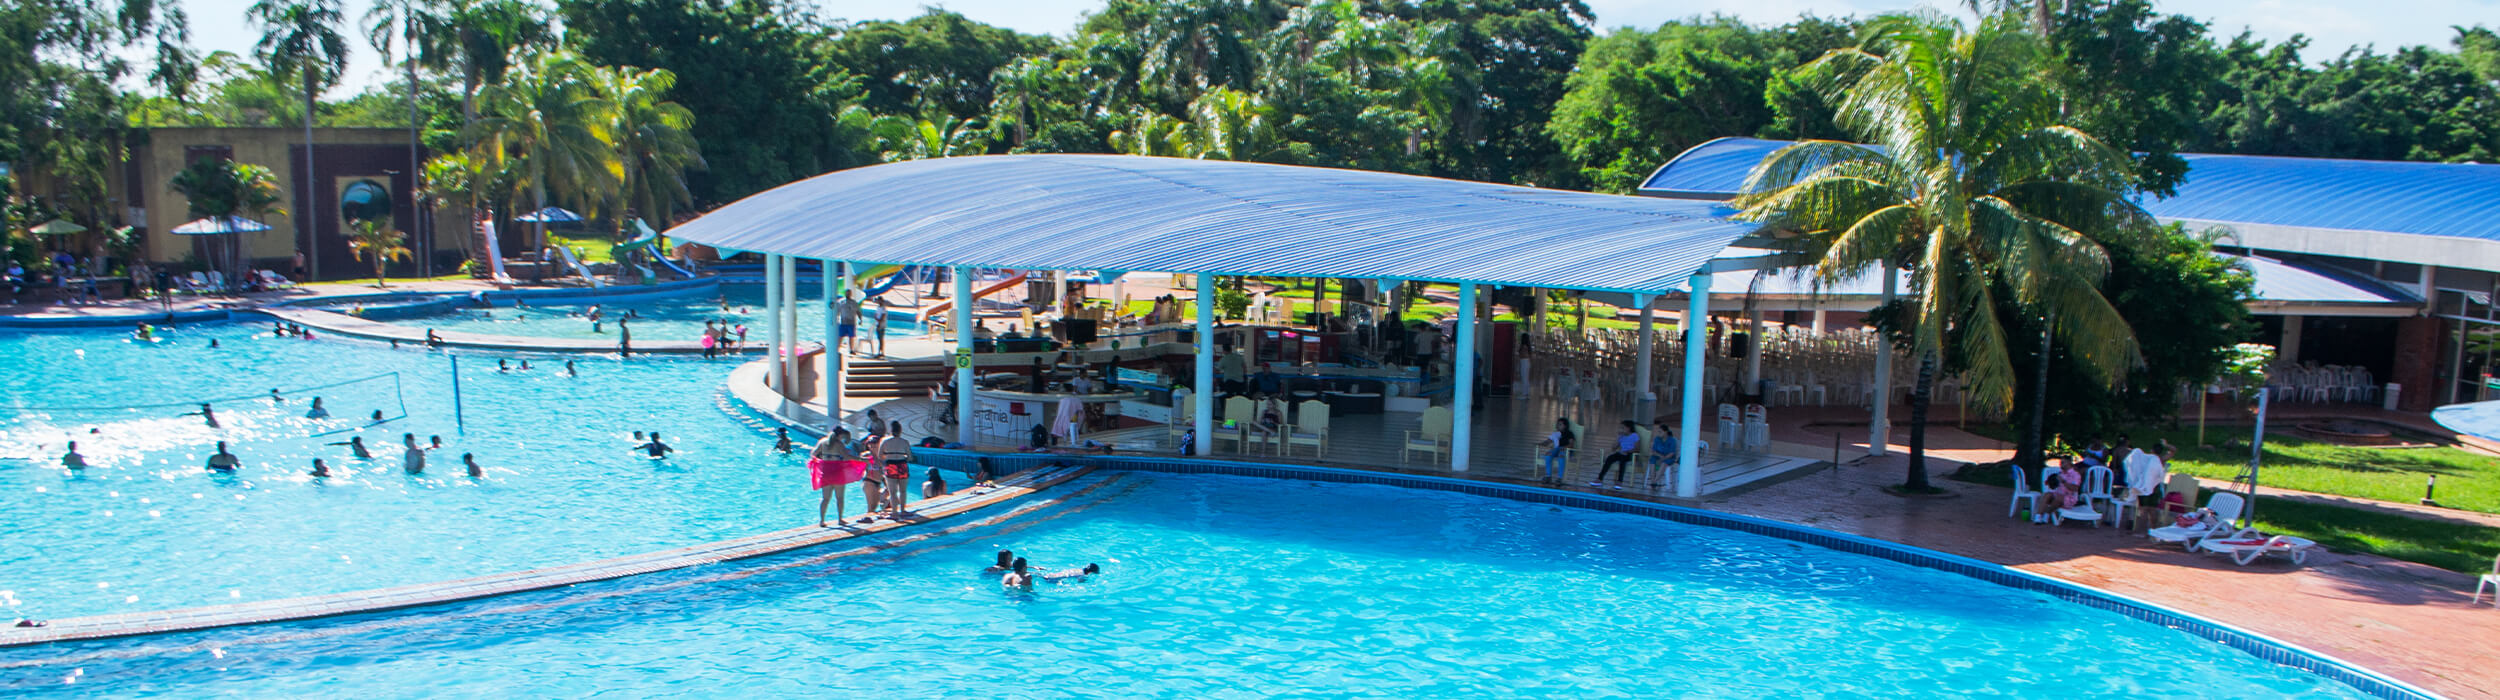 Hotel Terramia hospedaje piscina